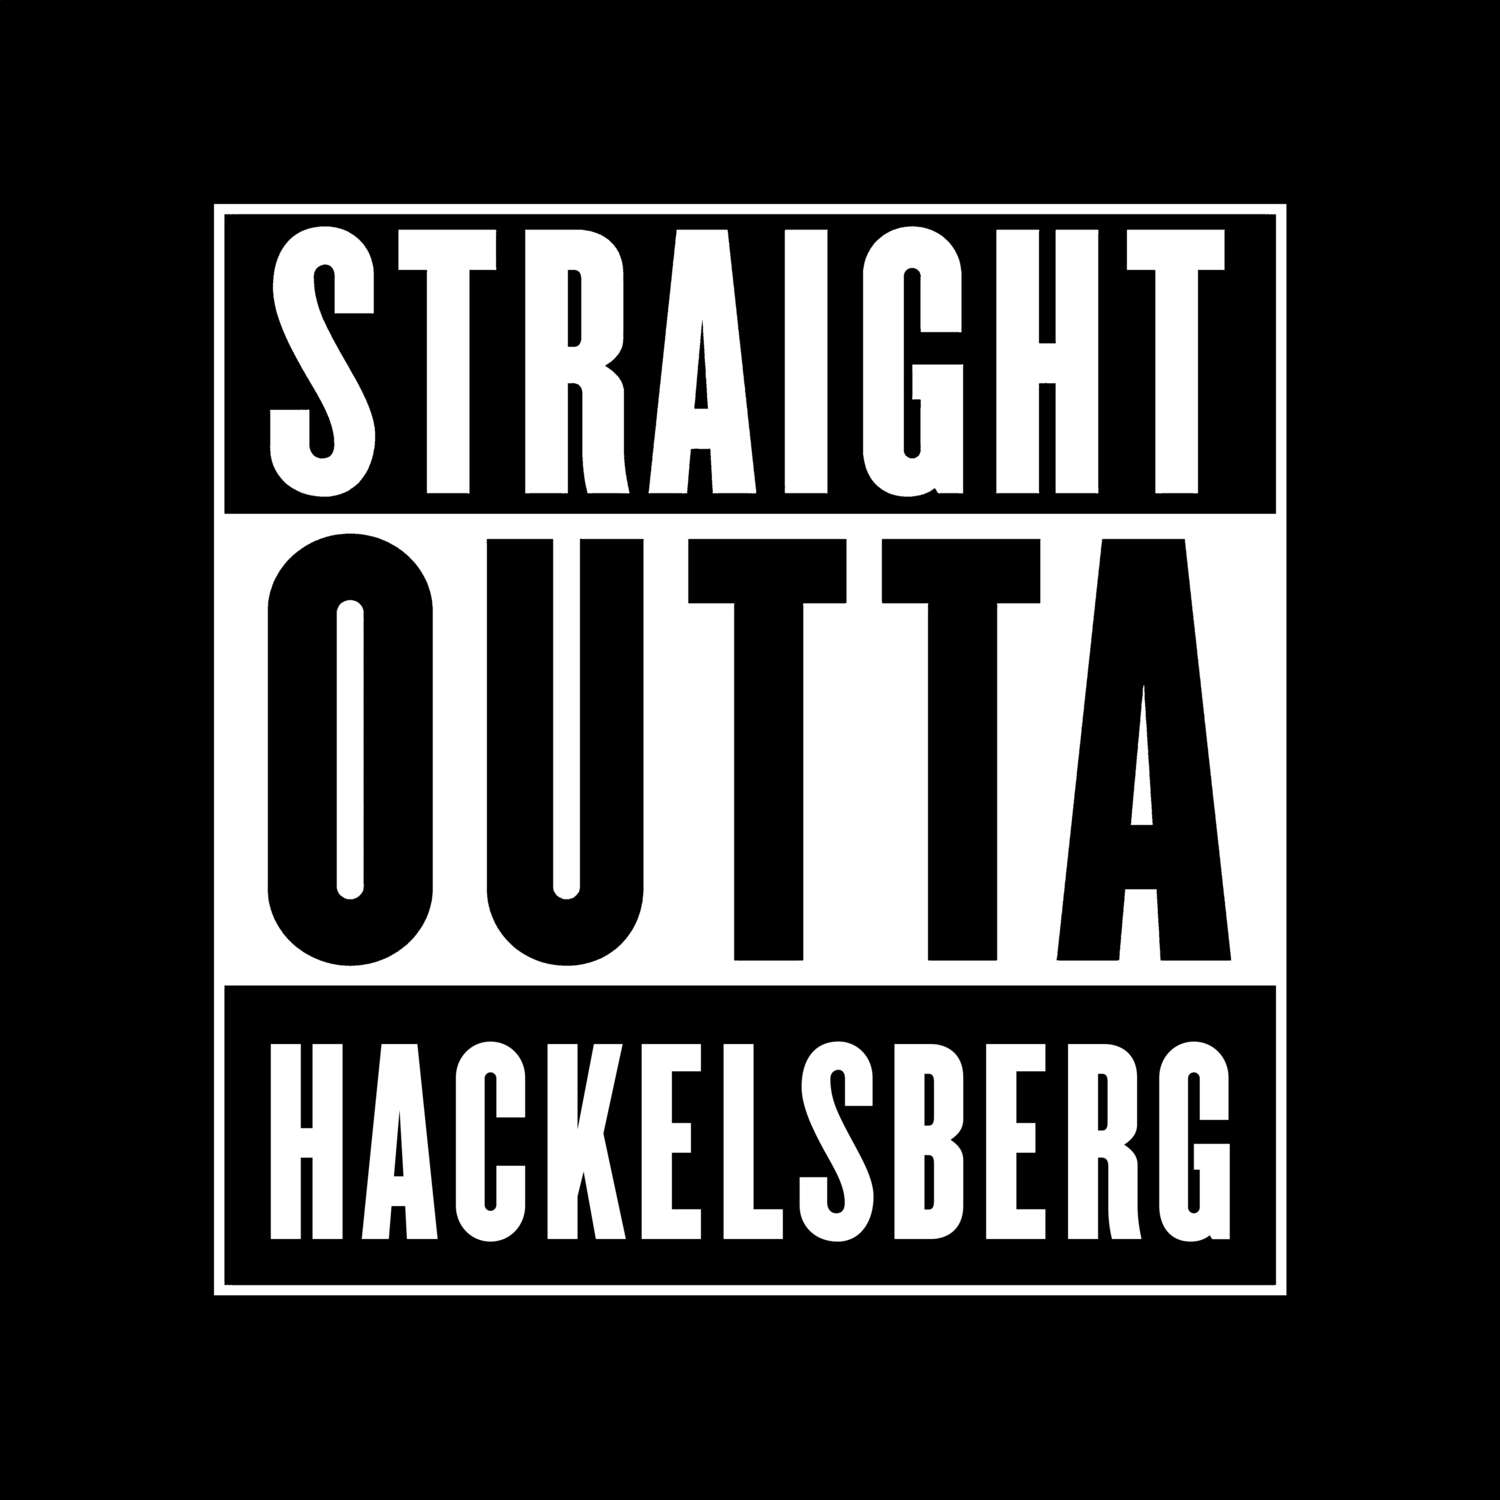 Hackelsberg T-Shirt »Straight Outta«